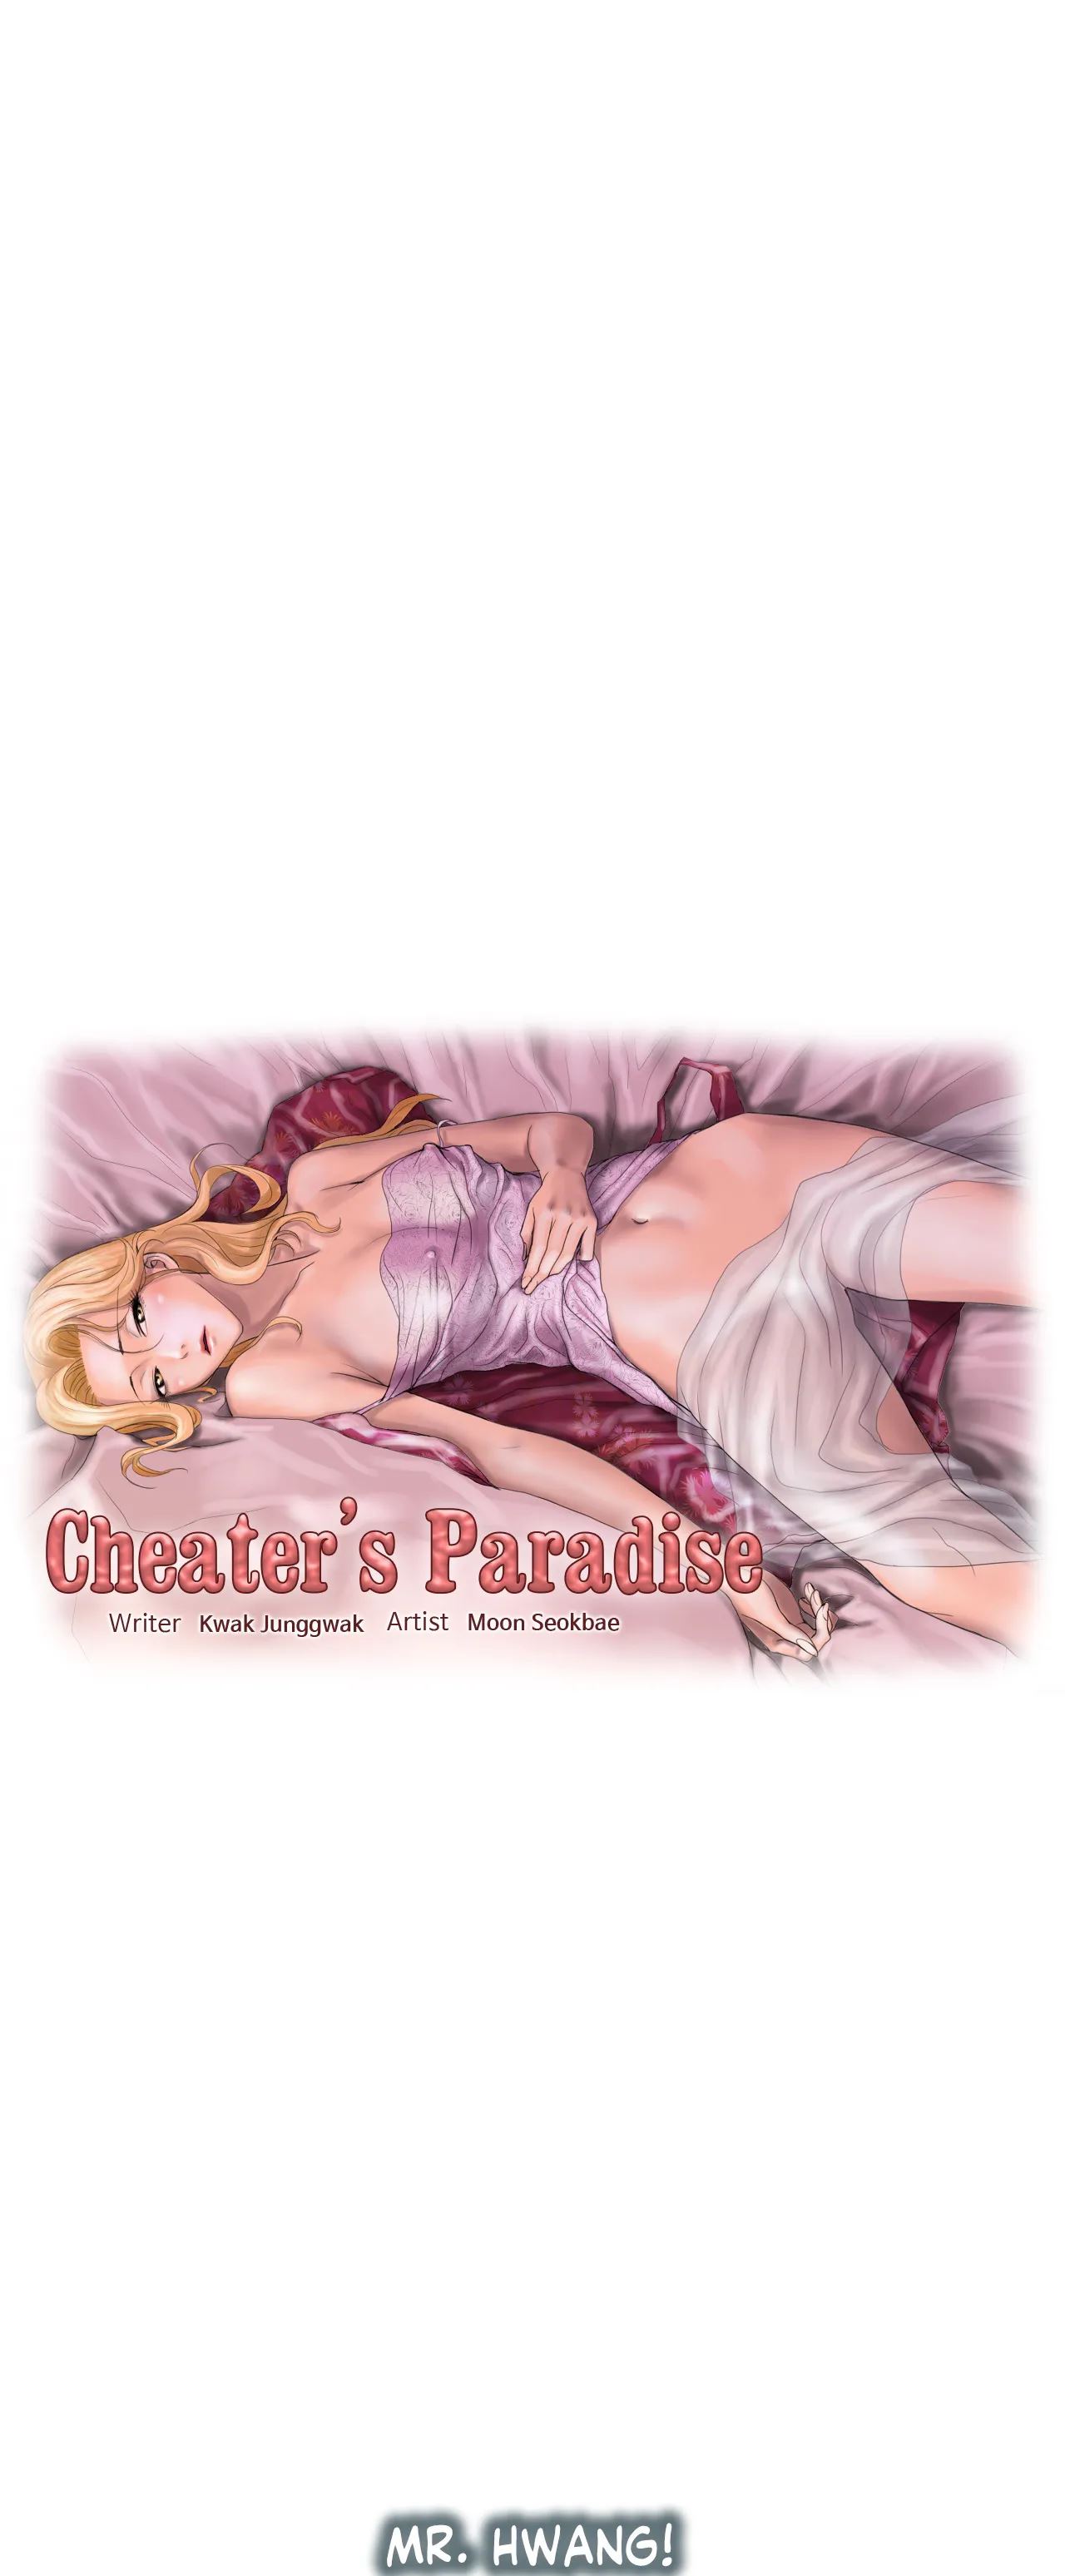 Cheater’s Paradise NEW image